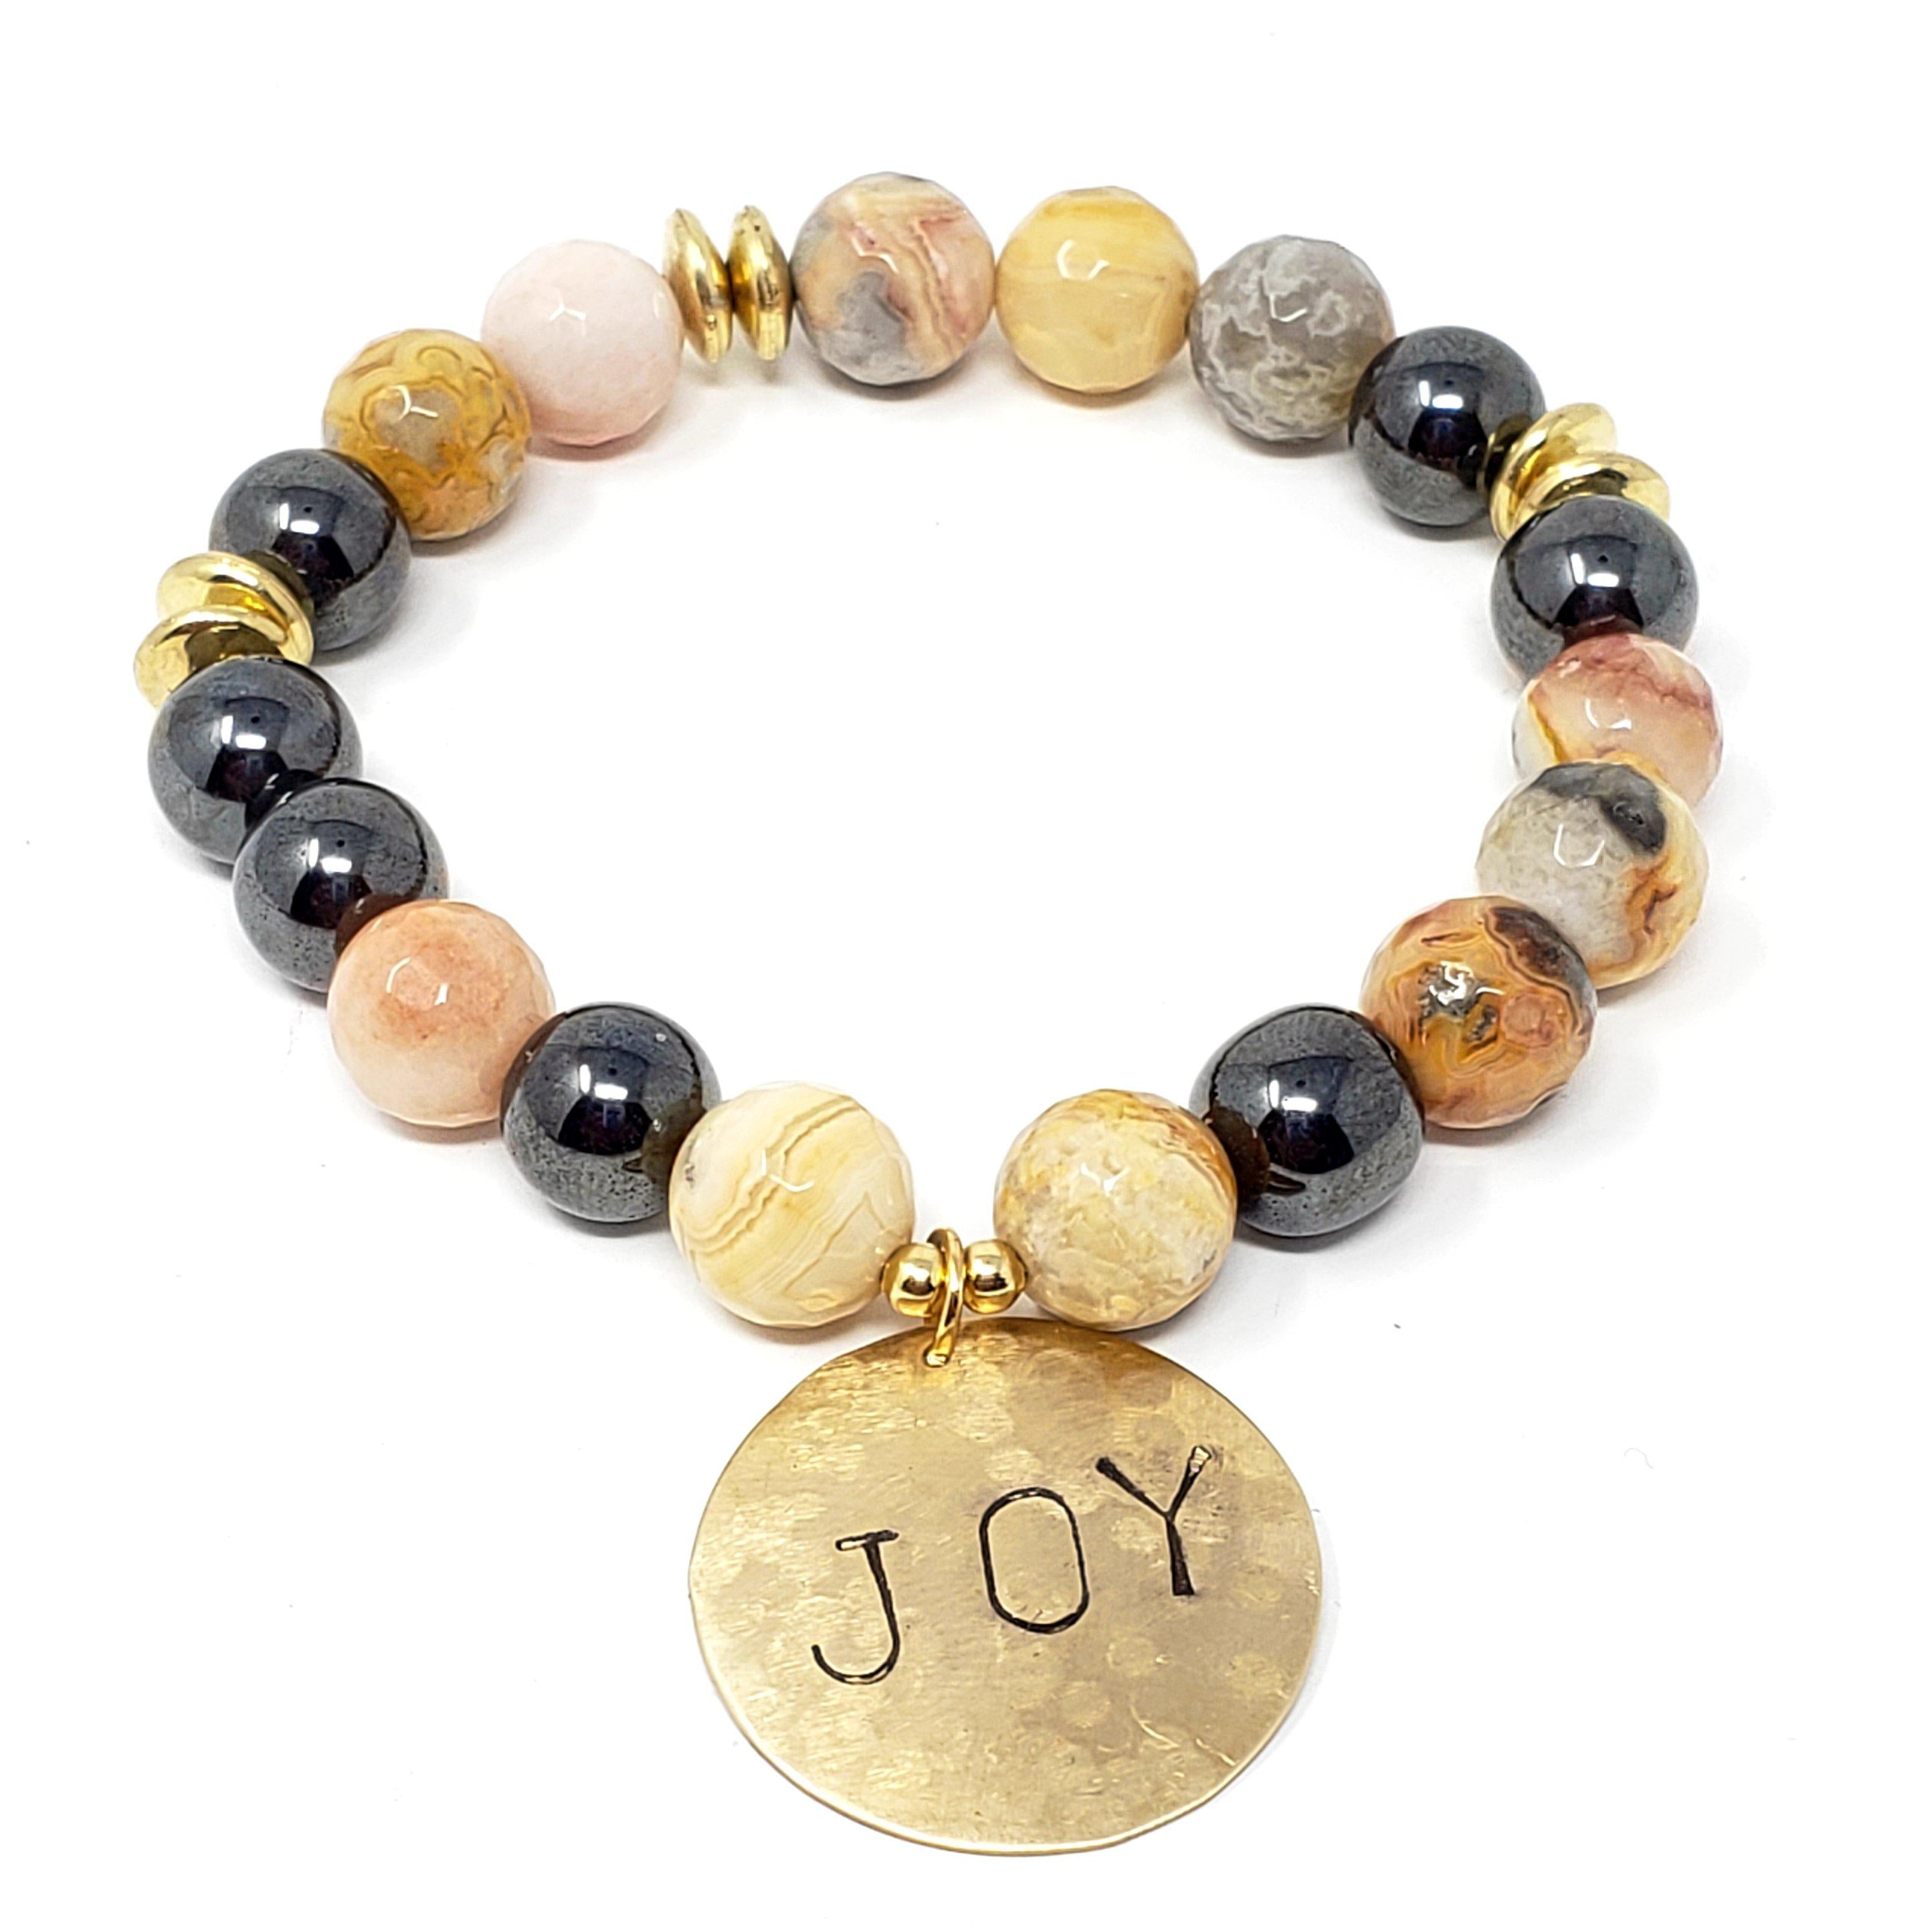 "I Choose Joy" Affirmation Bracelets